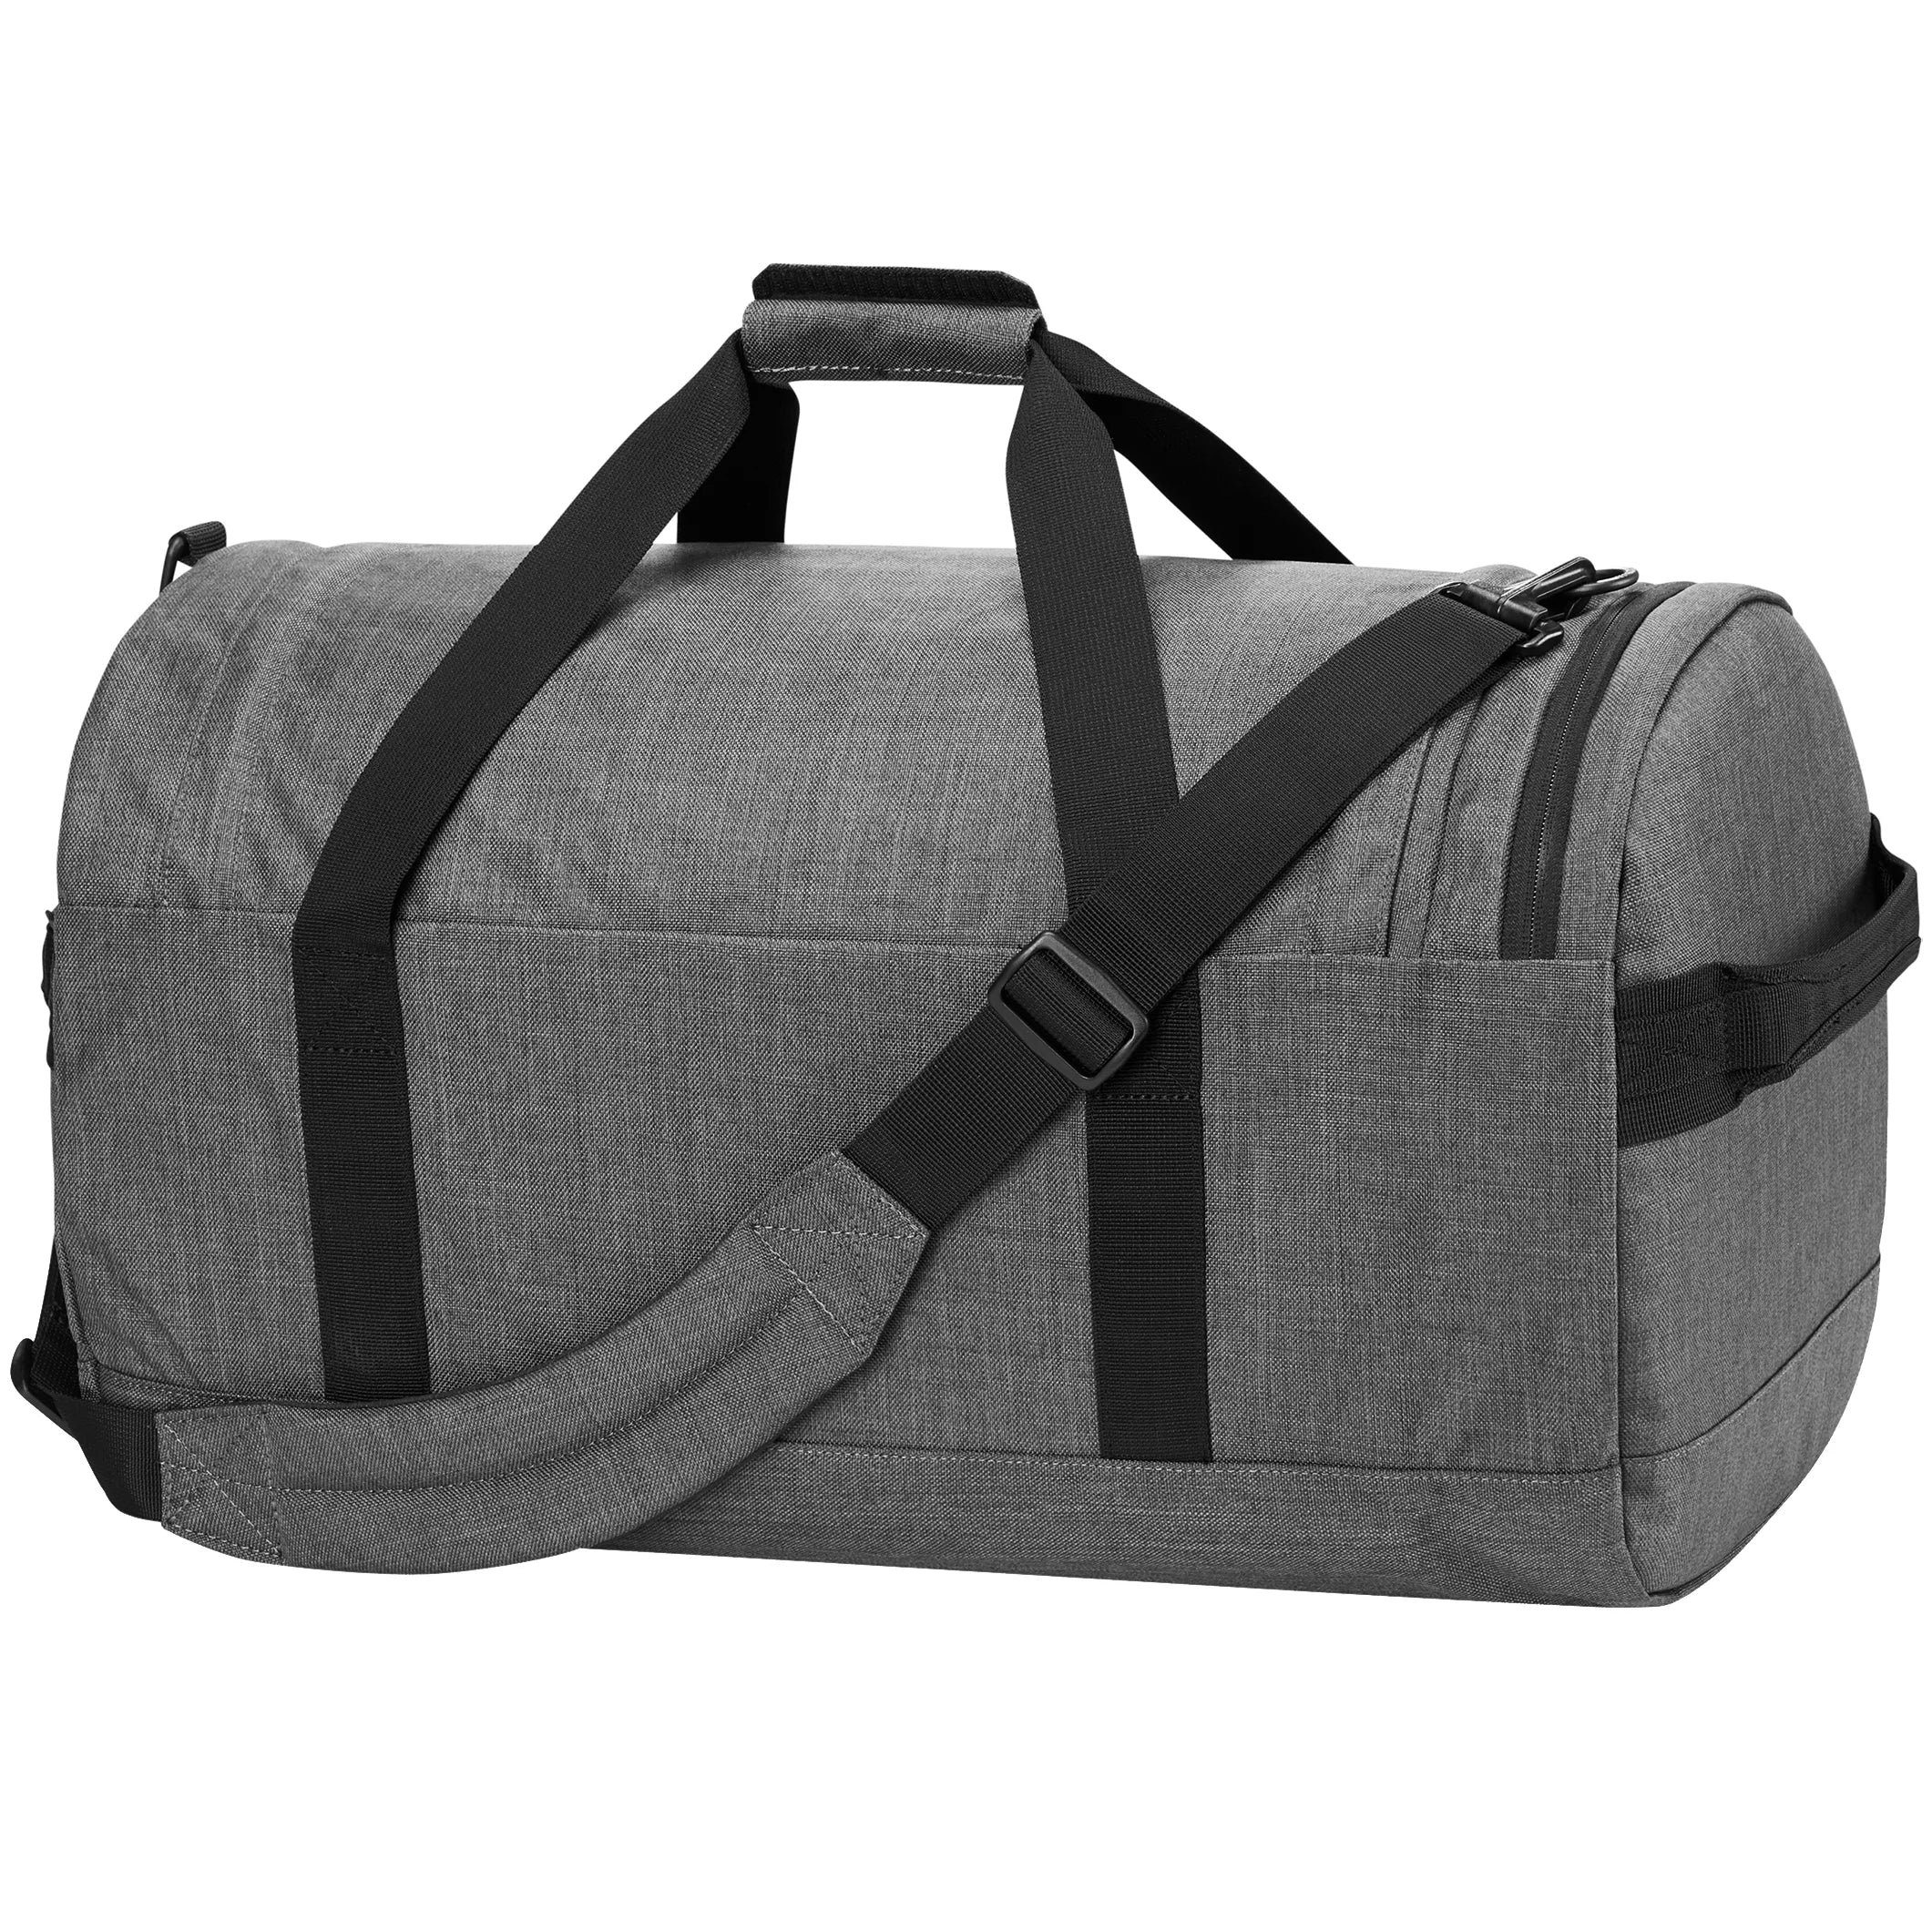 Dakine Packs & Bags EQ Duffle 50L Sports Bag 56 cm - Deep Blue